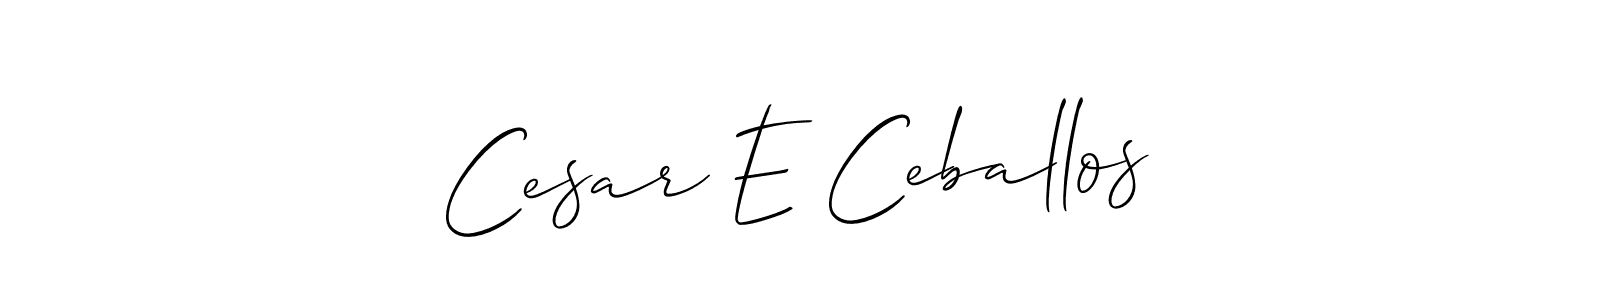 How to make Cesar E Ceballos signature? Allison_Script is a professional autograph style. Create handwritten signature for Cesar E Ceballos name. Cesar E Ceballos signature style 2 images and pictures png